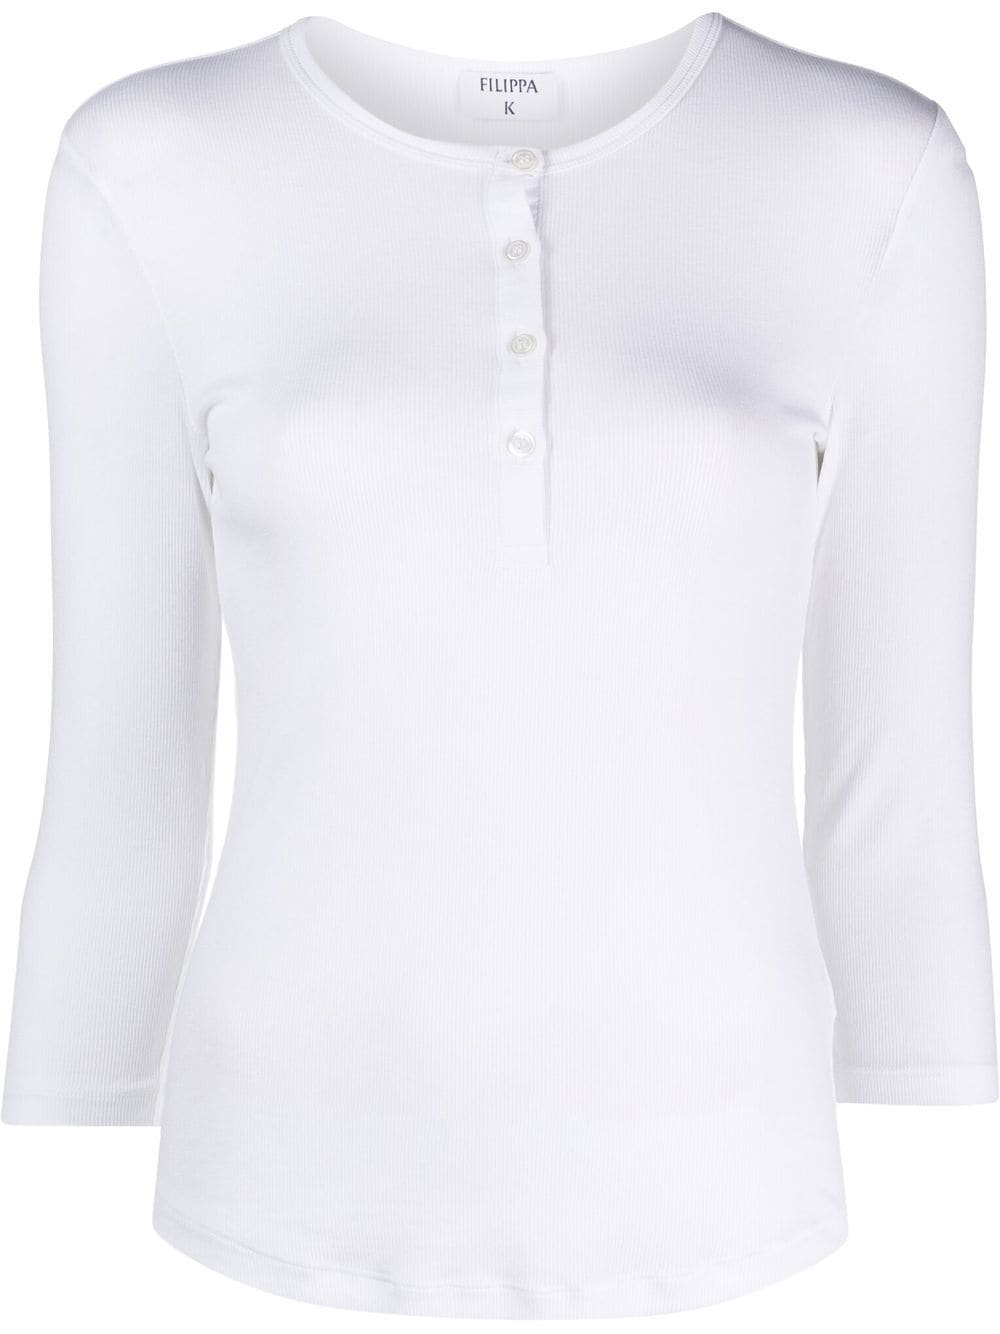 Filippa K Button-up Jersey Top In White